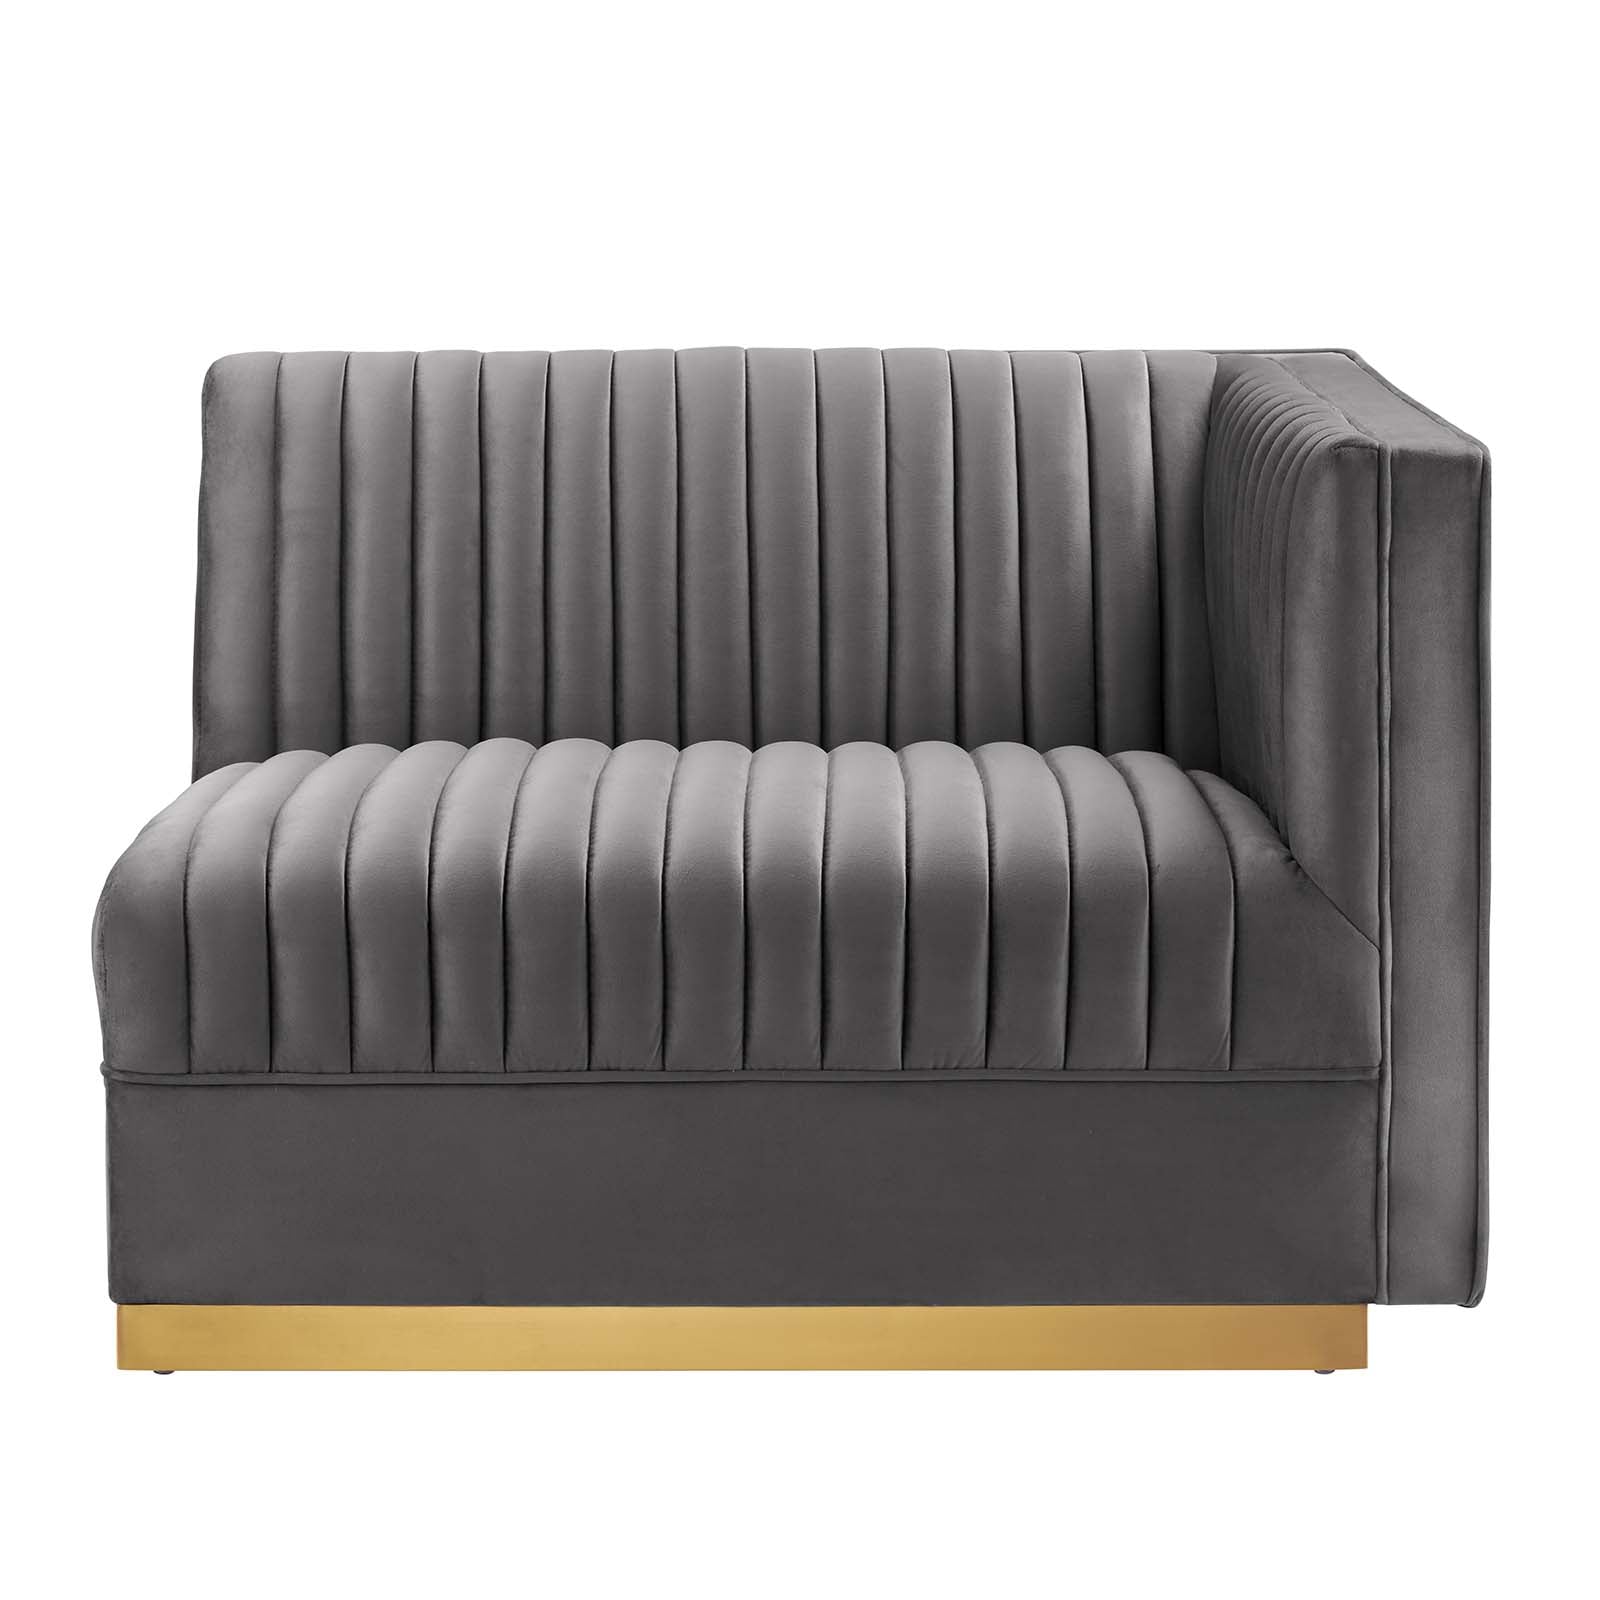 Sanguine Channel Tufted Performance Velvet Modular Sectional Sofa Right-Arm Chair - East Shore Modern Home Furnishings